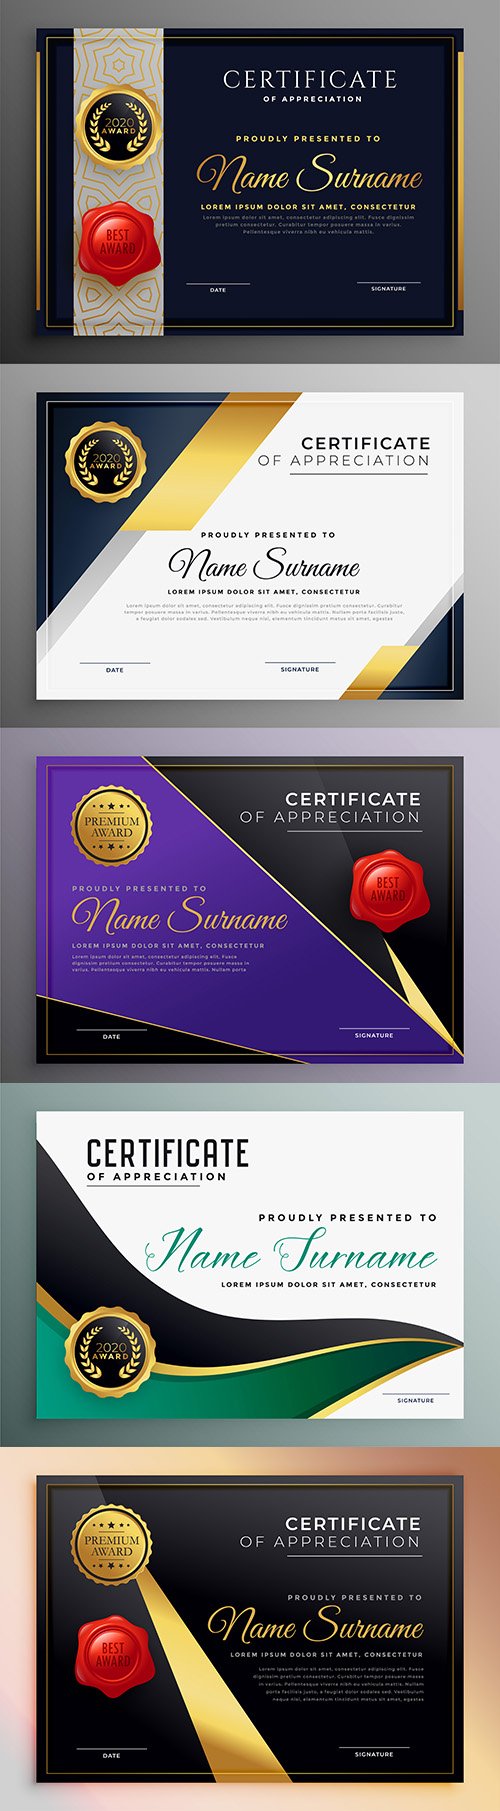 Certificate achievement template design collection 2